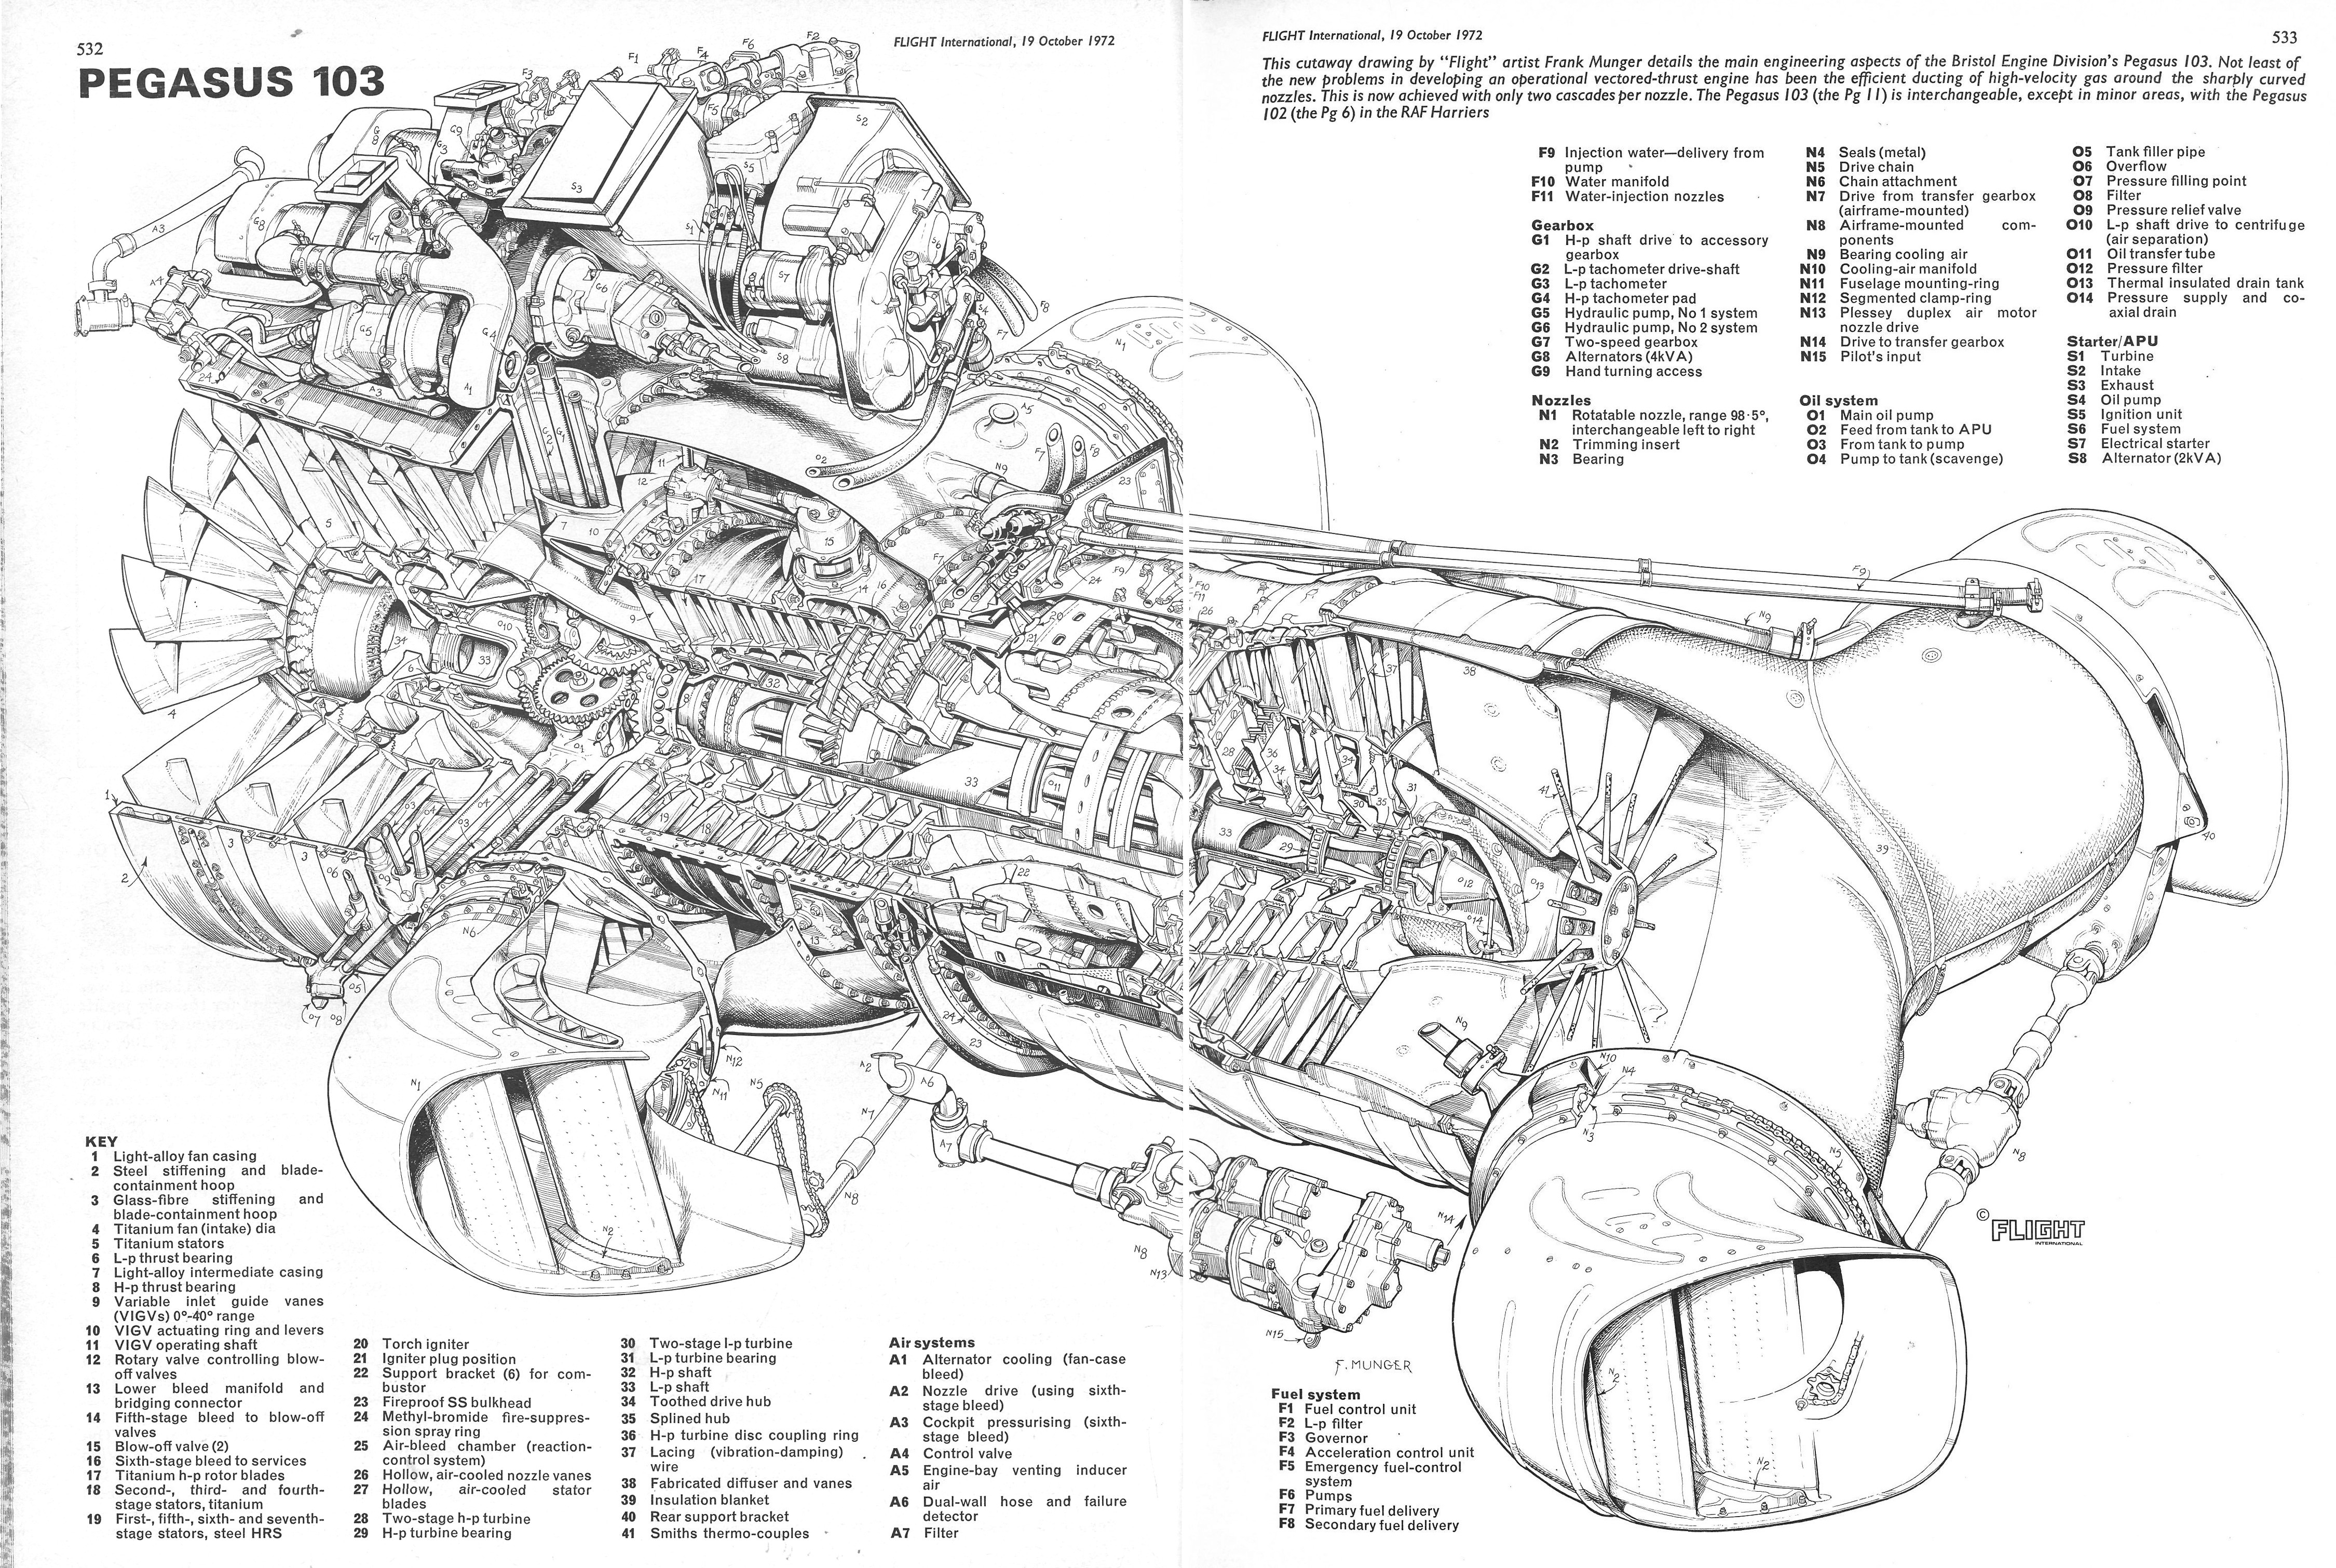 Plane Engine Diagram Rolls Royce Pegasus 103 Turbofan Cutaway Of Plane Engine Diagram